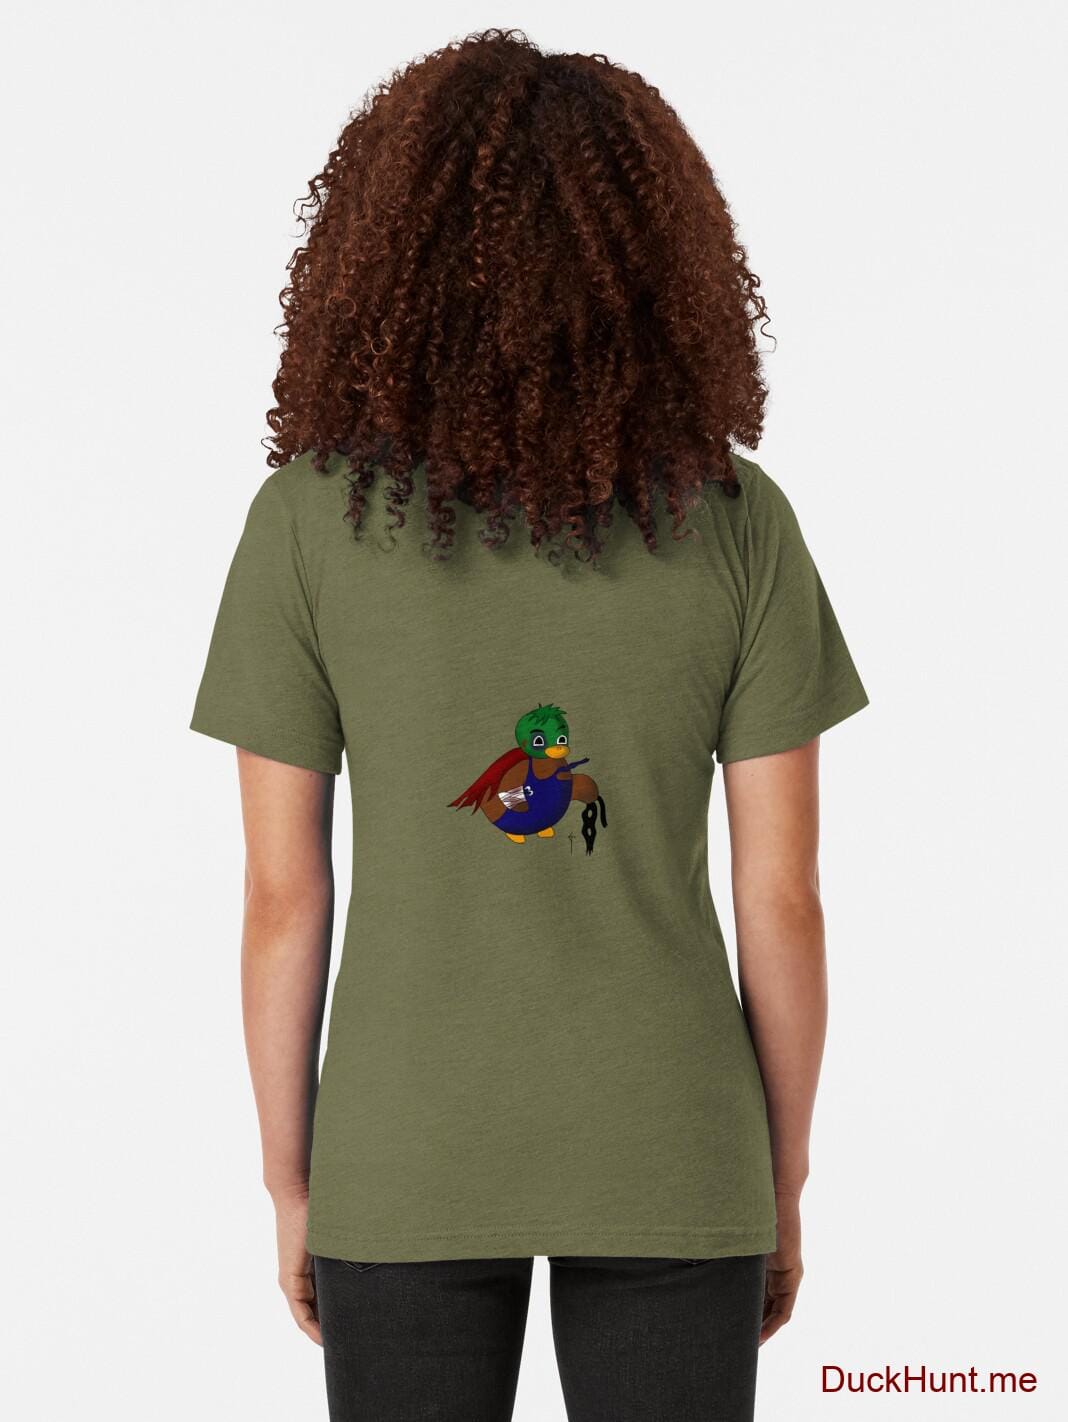 Dead DuckHunt Boss (smokeless) Green Tri-blend T-Shirt (Back printed) alternative image 1